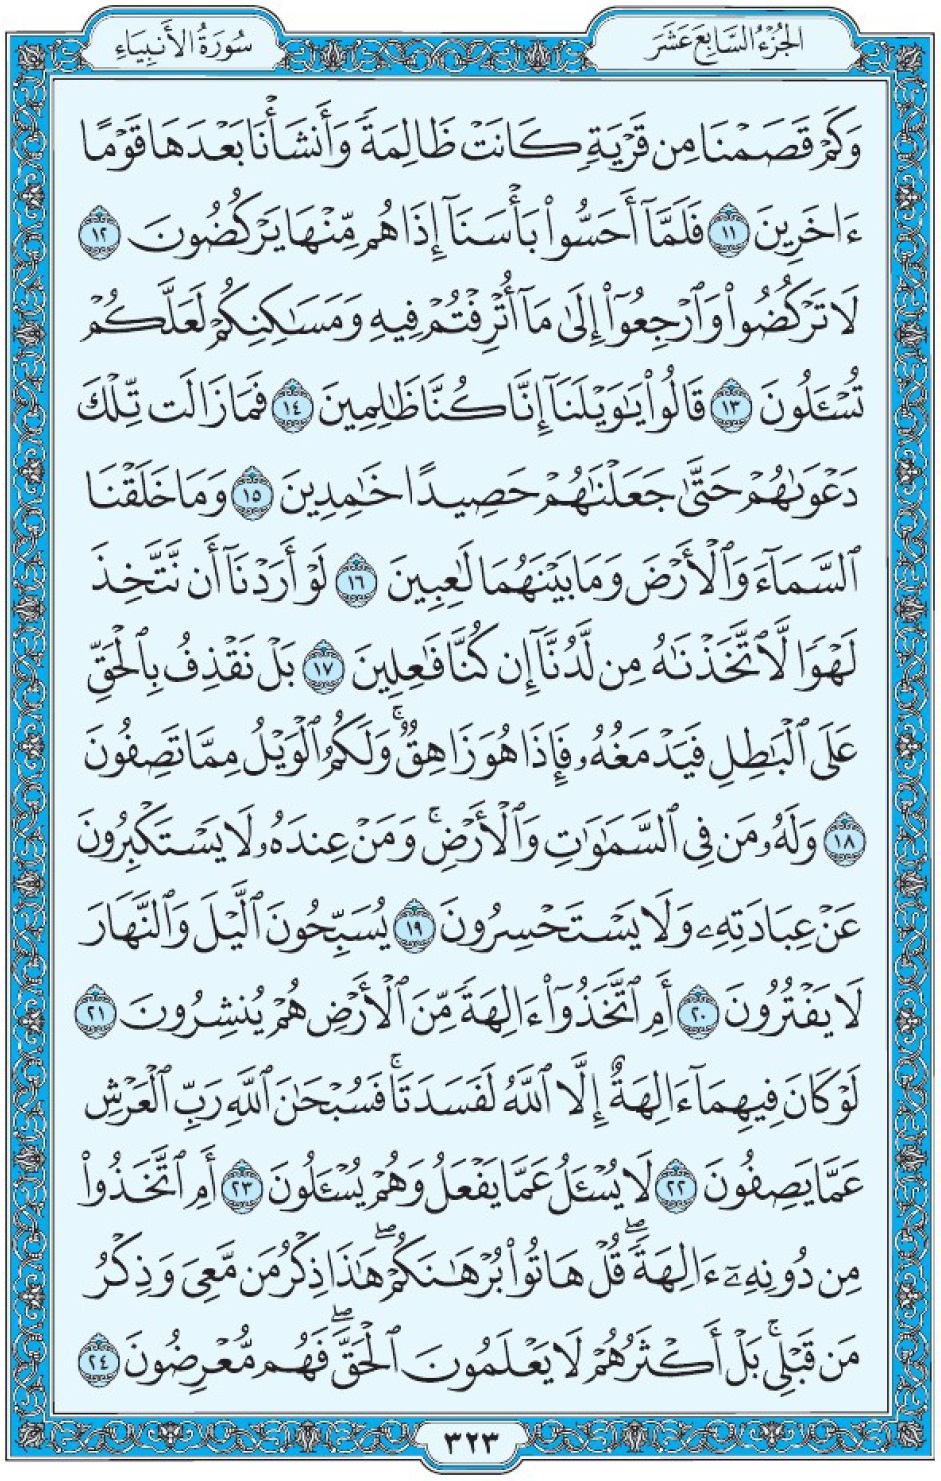 Коран Мединский мусхаф страница 323, Аль-Анбия, аят 11-24